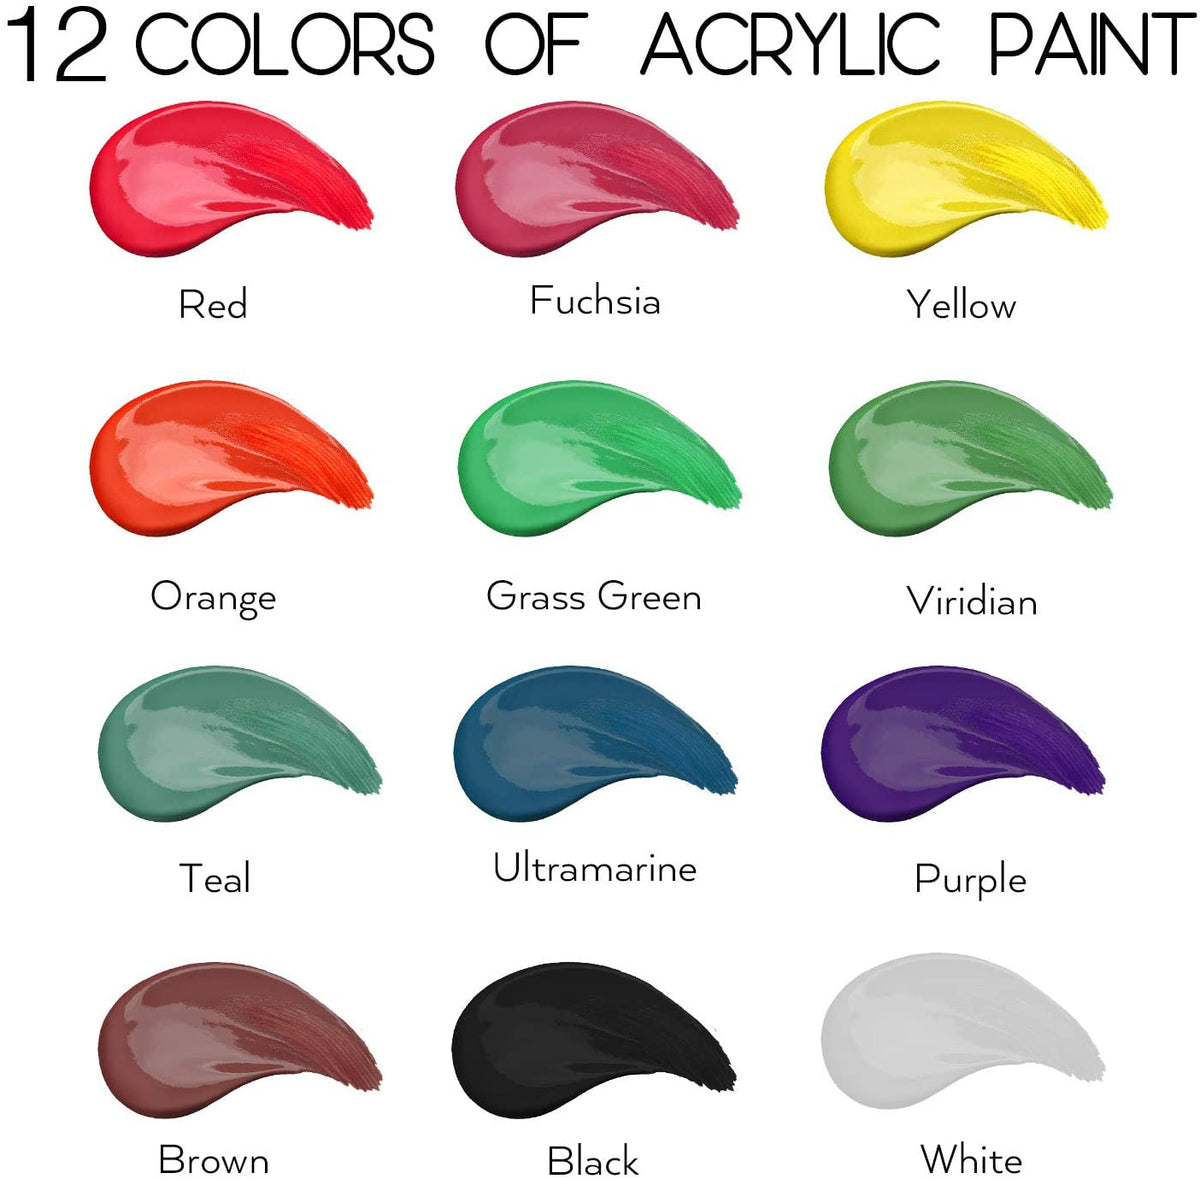 HissiCo Acrylic Paint Set of 36 Colors 2FL oz 60ml Bottles,Non Toxic 36 Colors Acrylic Paint No Fading Rich Pigment for Kids Adults Arti